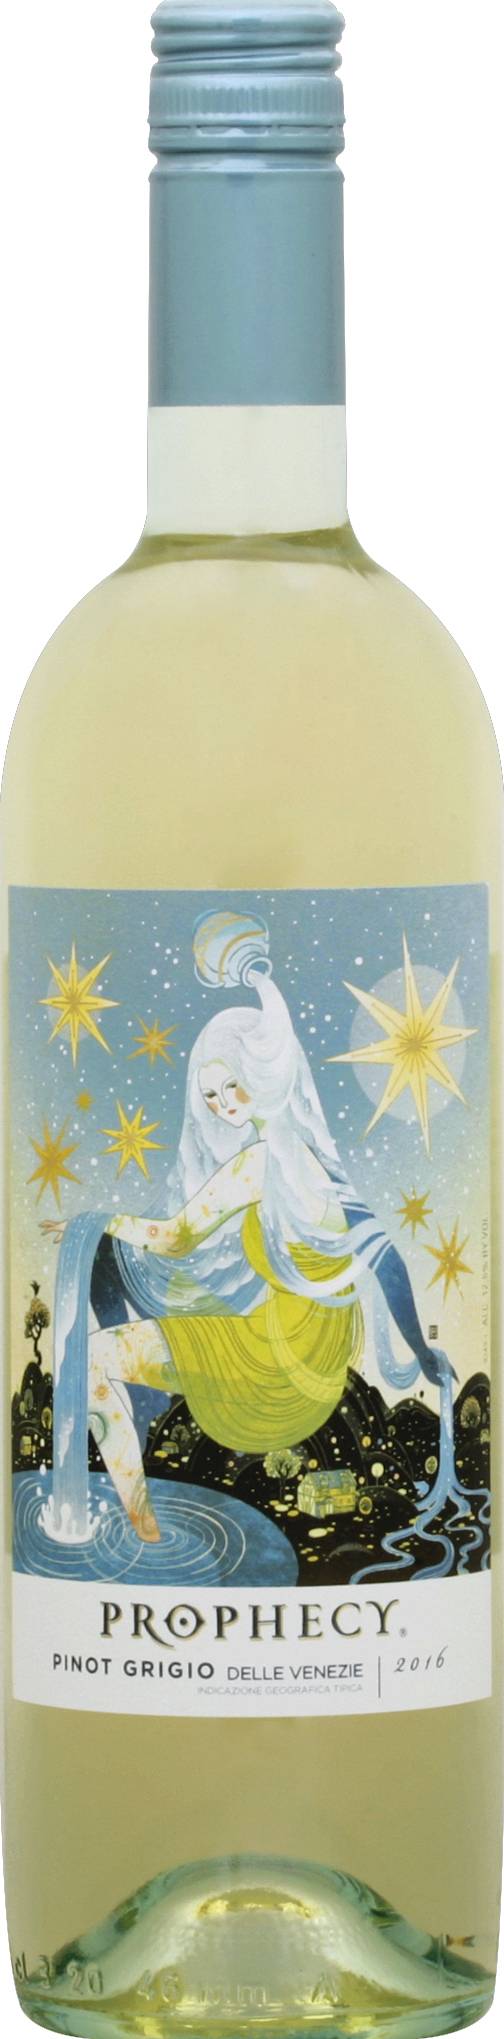 Prophecy Pinot Grigio White Wine 2016 (750 ml)